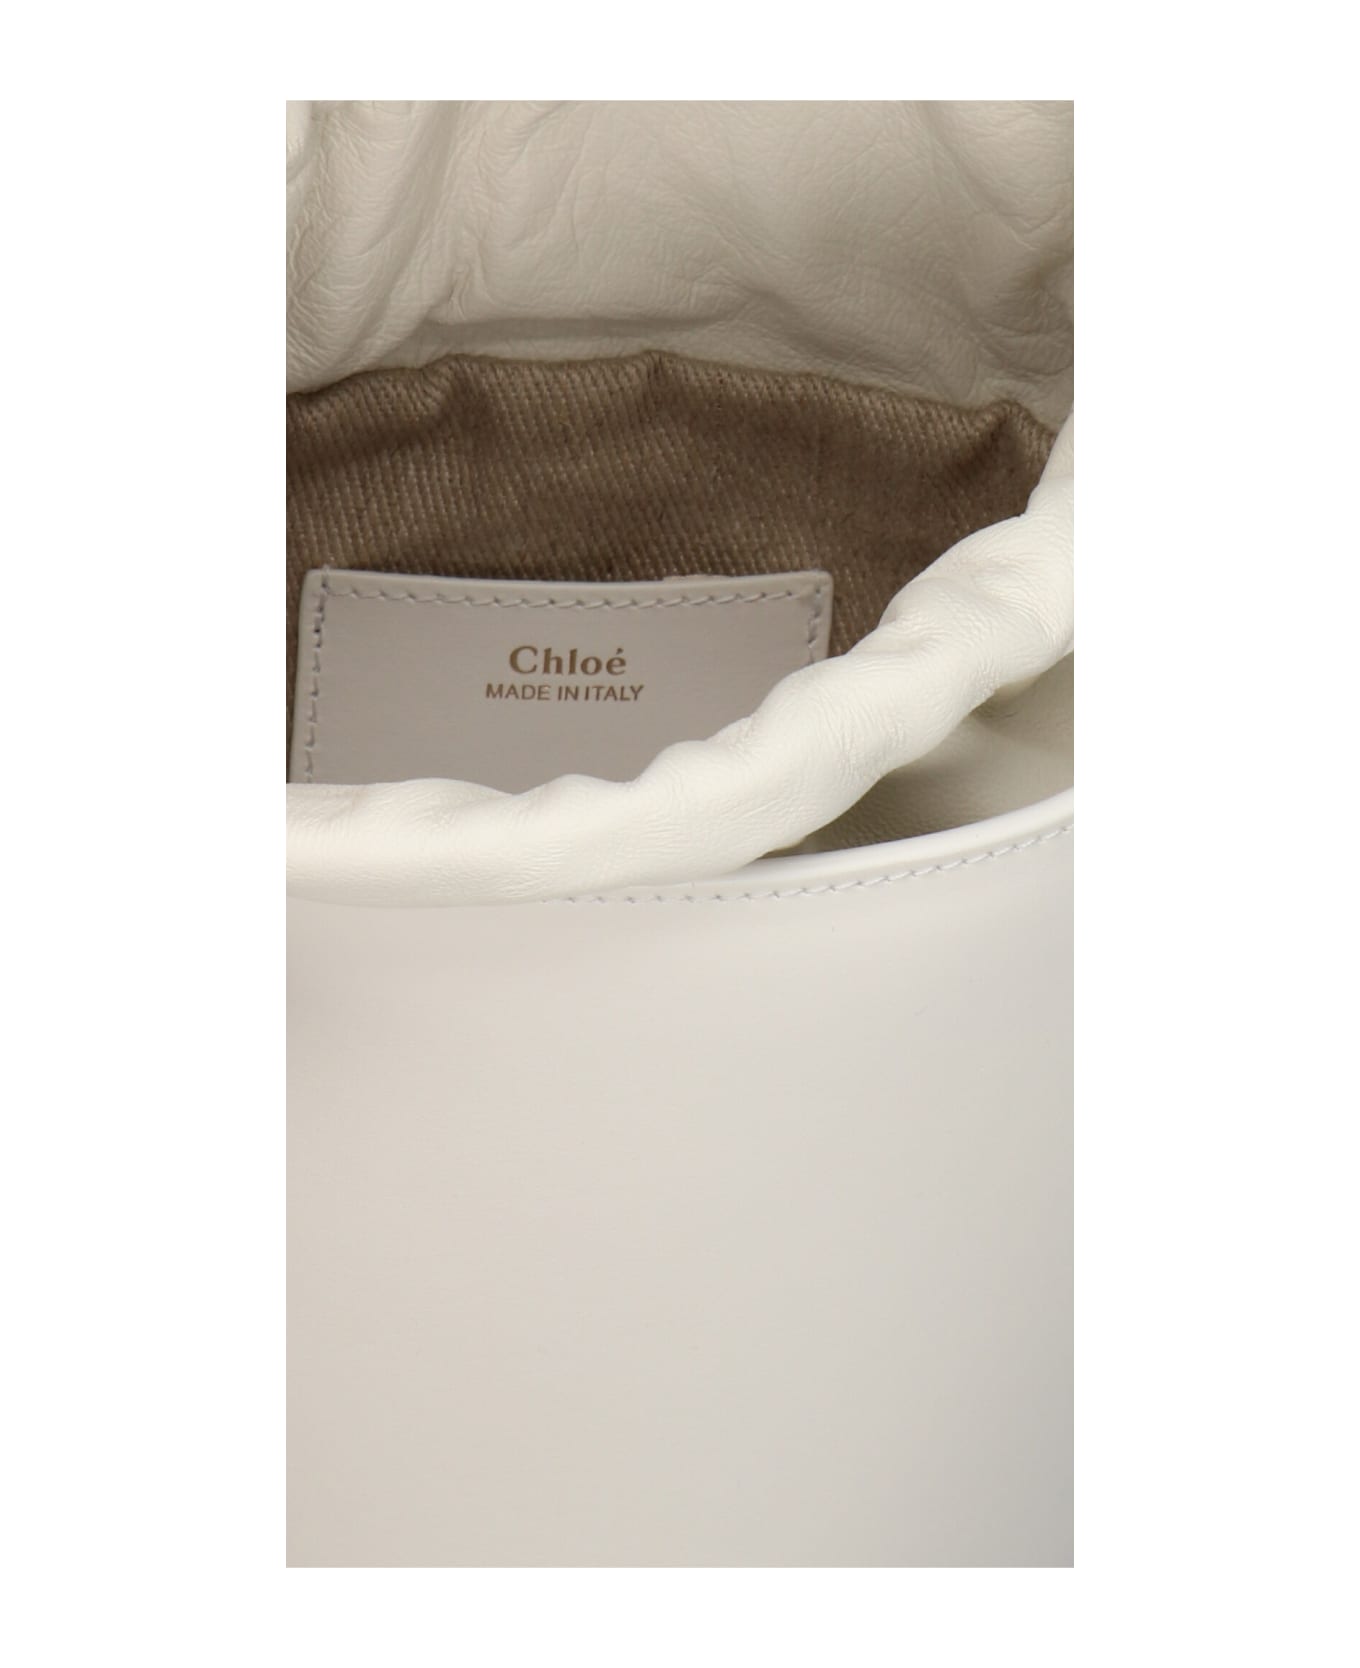 Chloé Leather Bucket Bag - White